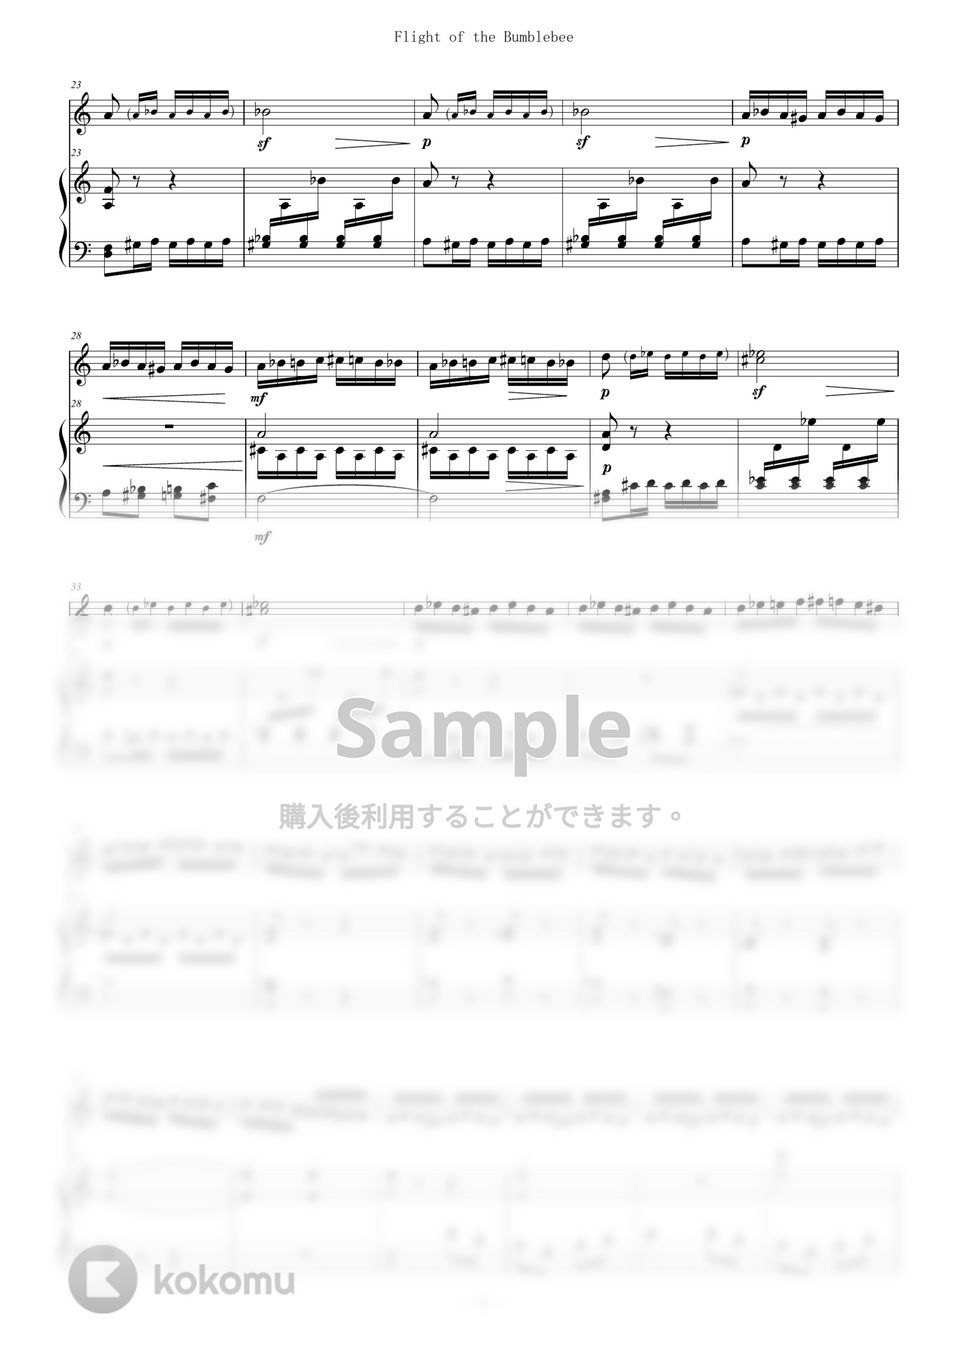 Rimsky-Korsakov - 熊蜂の飛行 for Violin and Piano (Flight of the Bumblebee) (ピアノ/ヴァイオリン/バイオリン) by Zoe